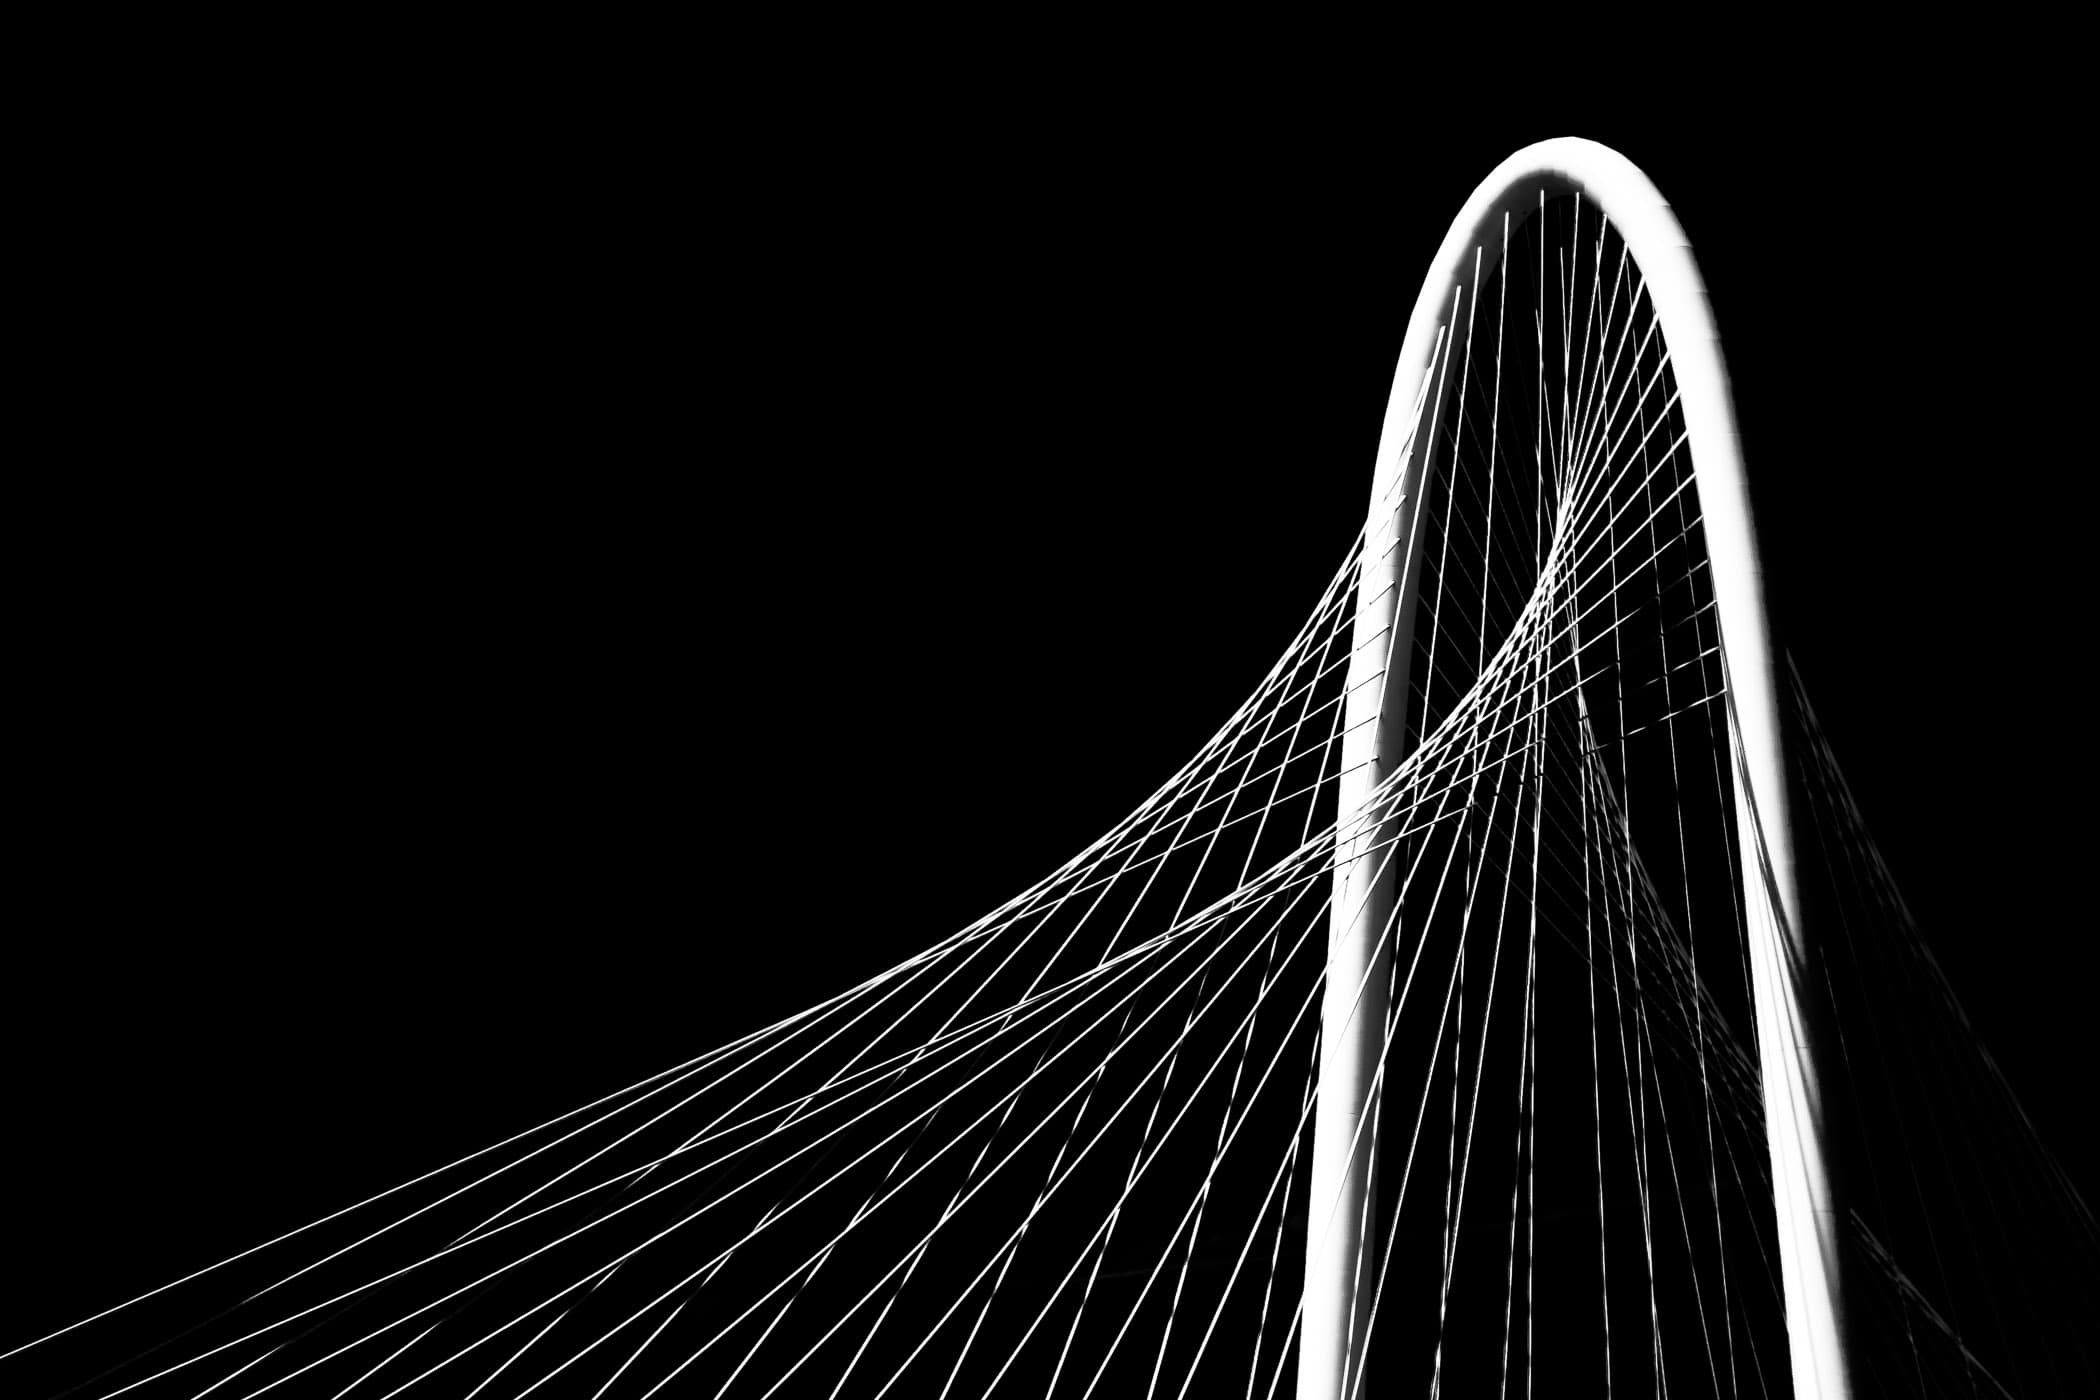 Detail of the main arch and suspension cables of Santiago Calatrava's Margaret Hunt Hill Bridge, Dallas, Texas.